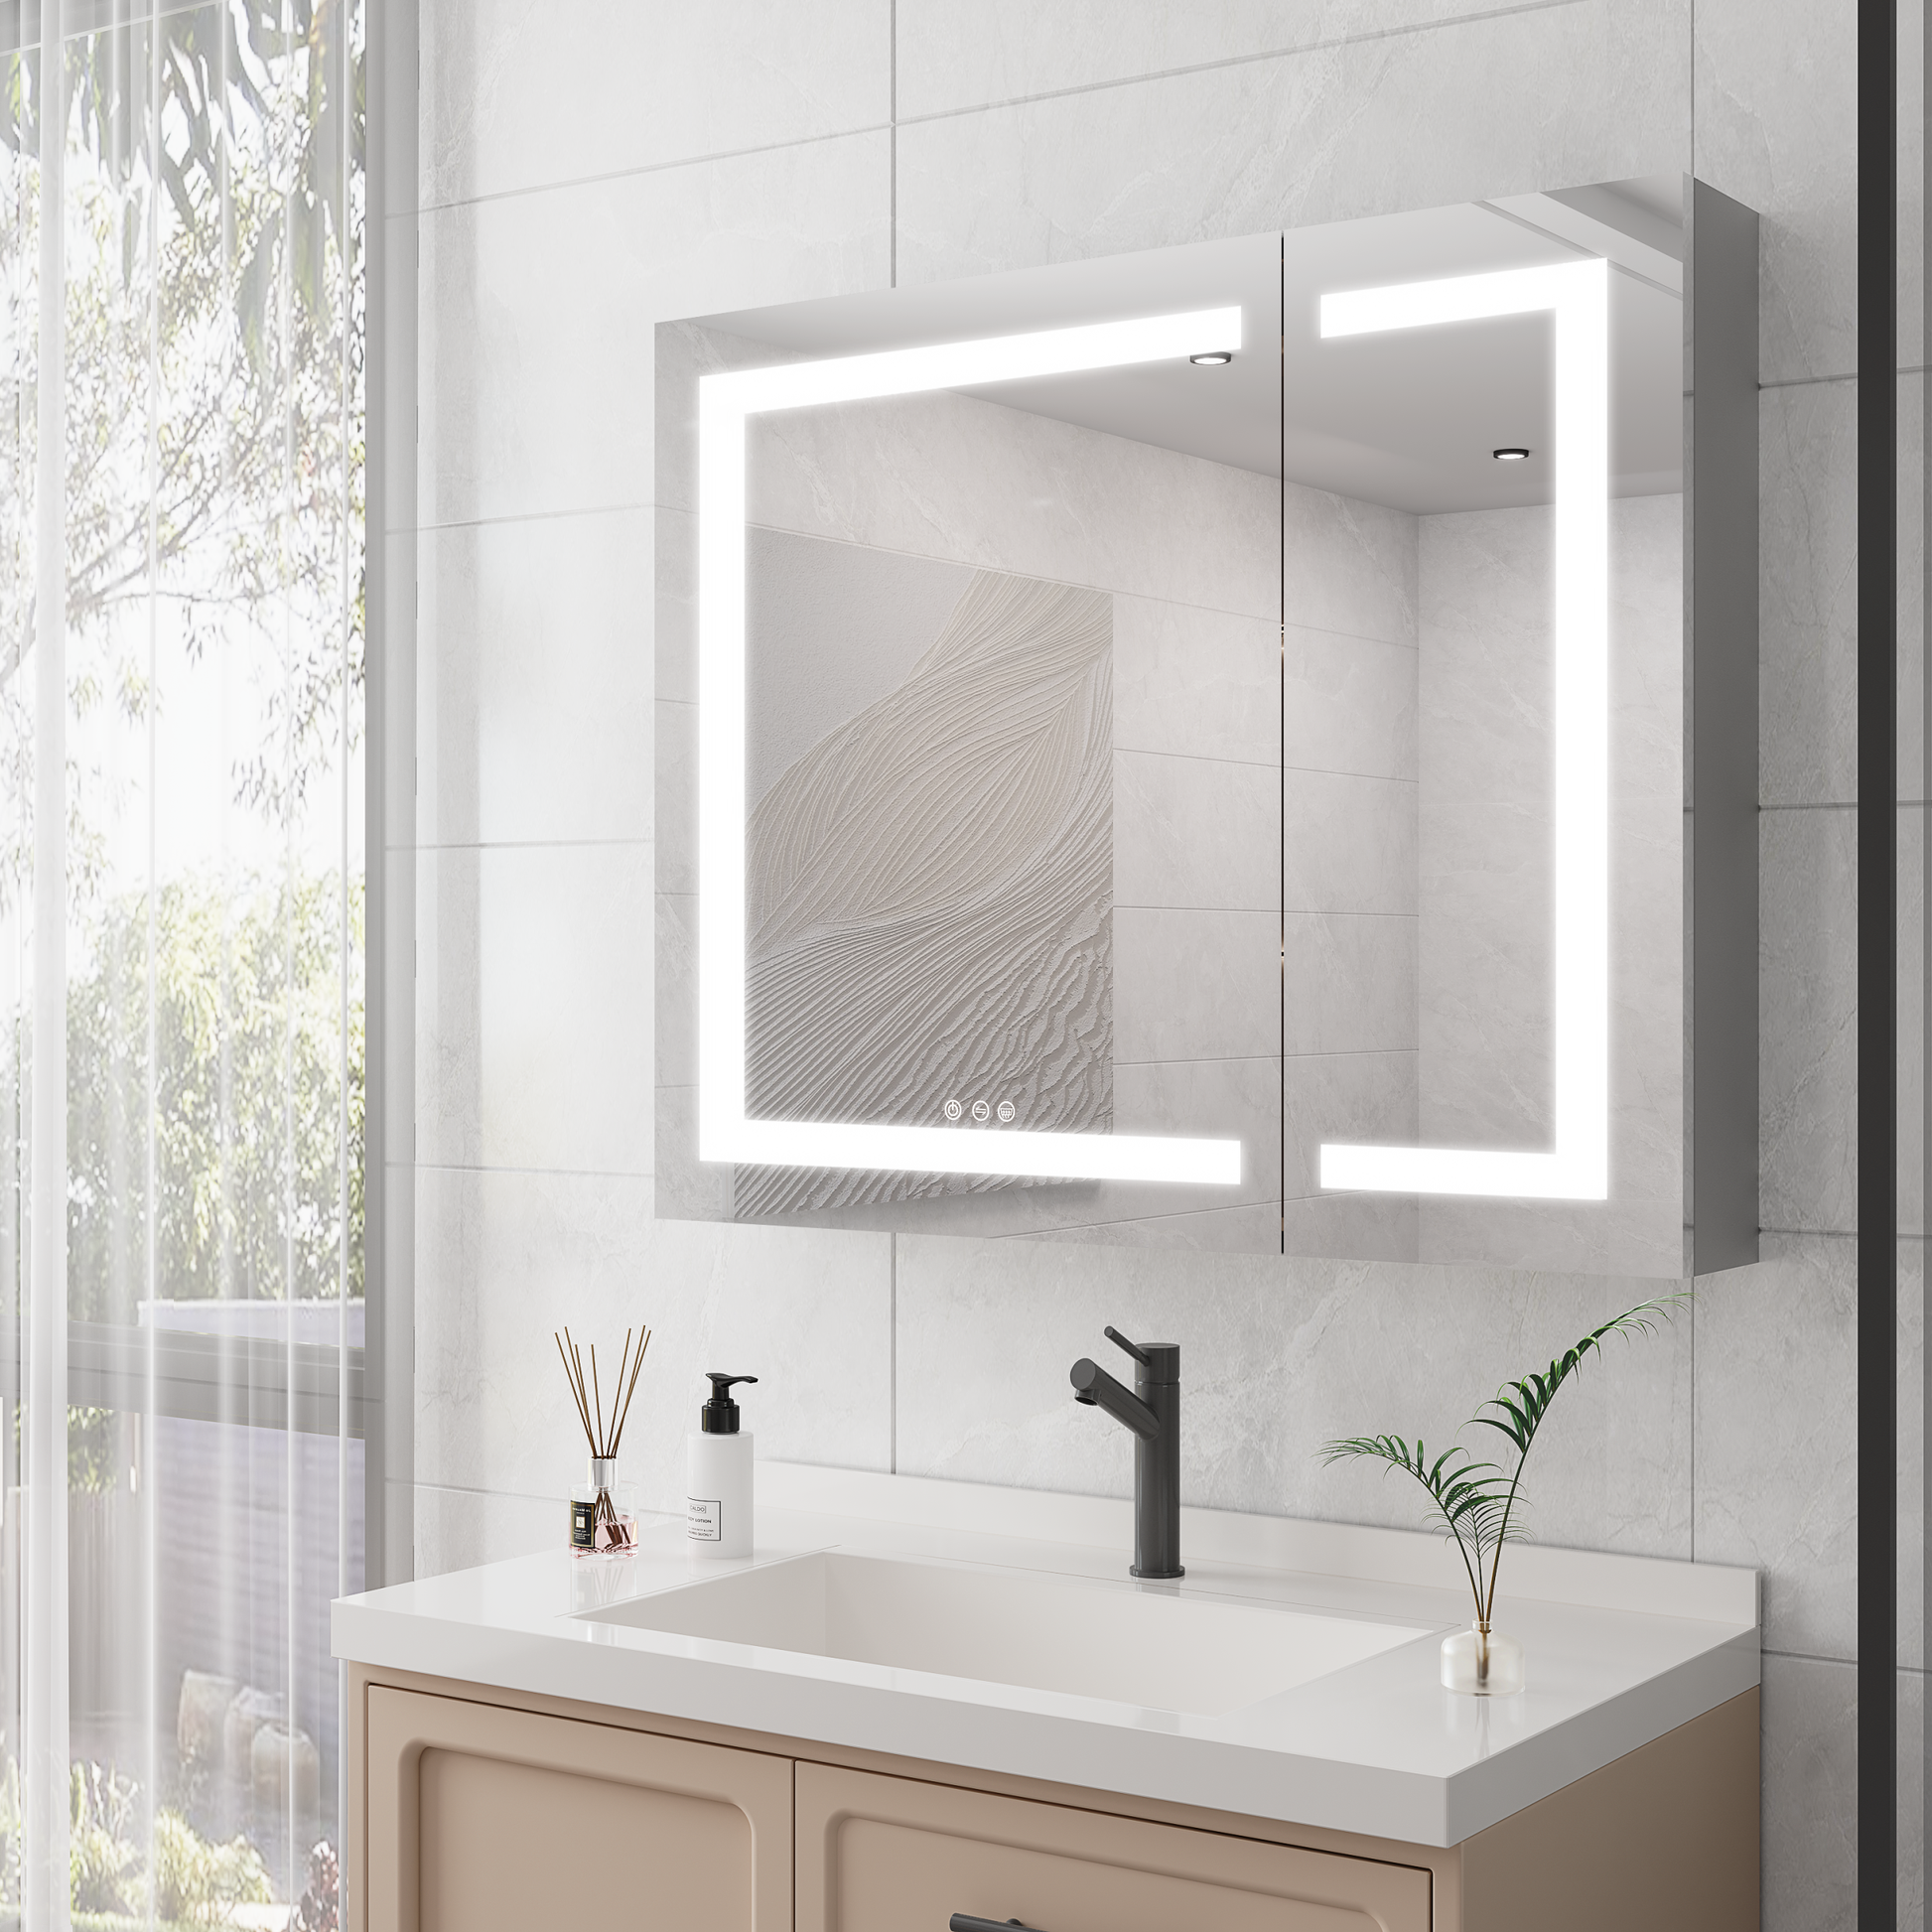 36x30 inch Medicine Cabinet with LED Vanity Mirror mirror included-bathroom-powder